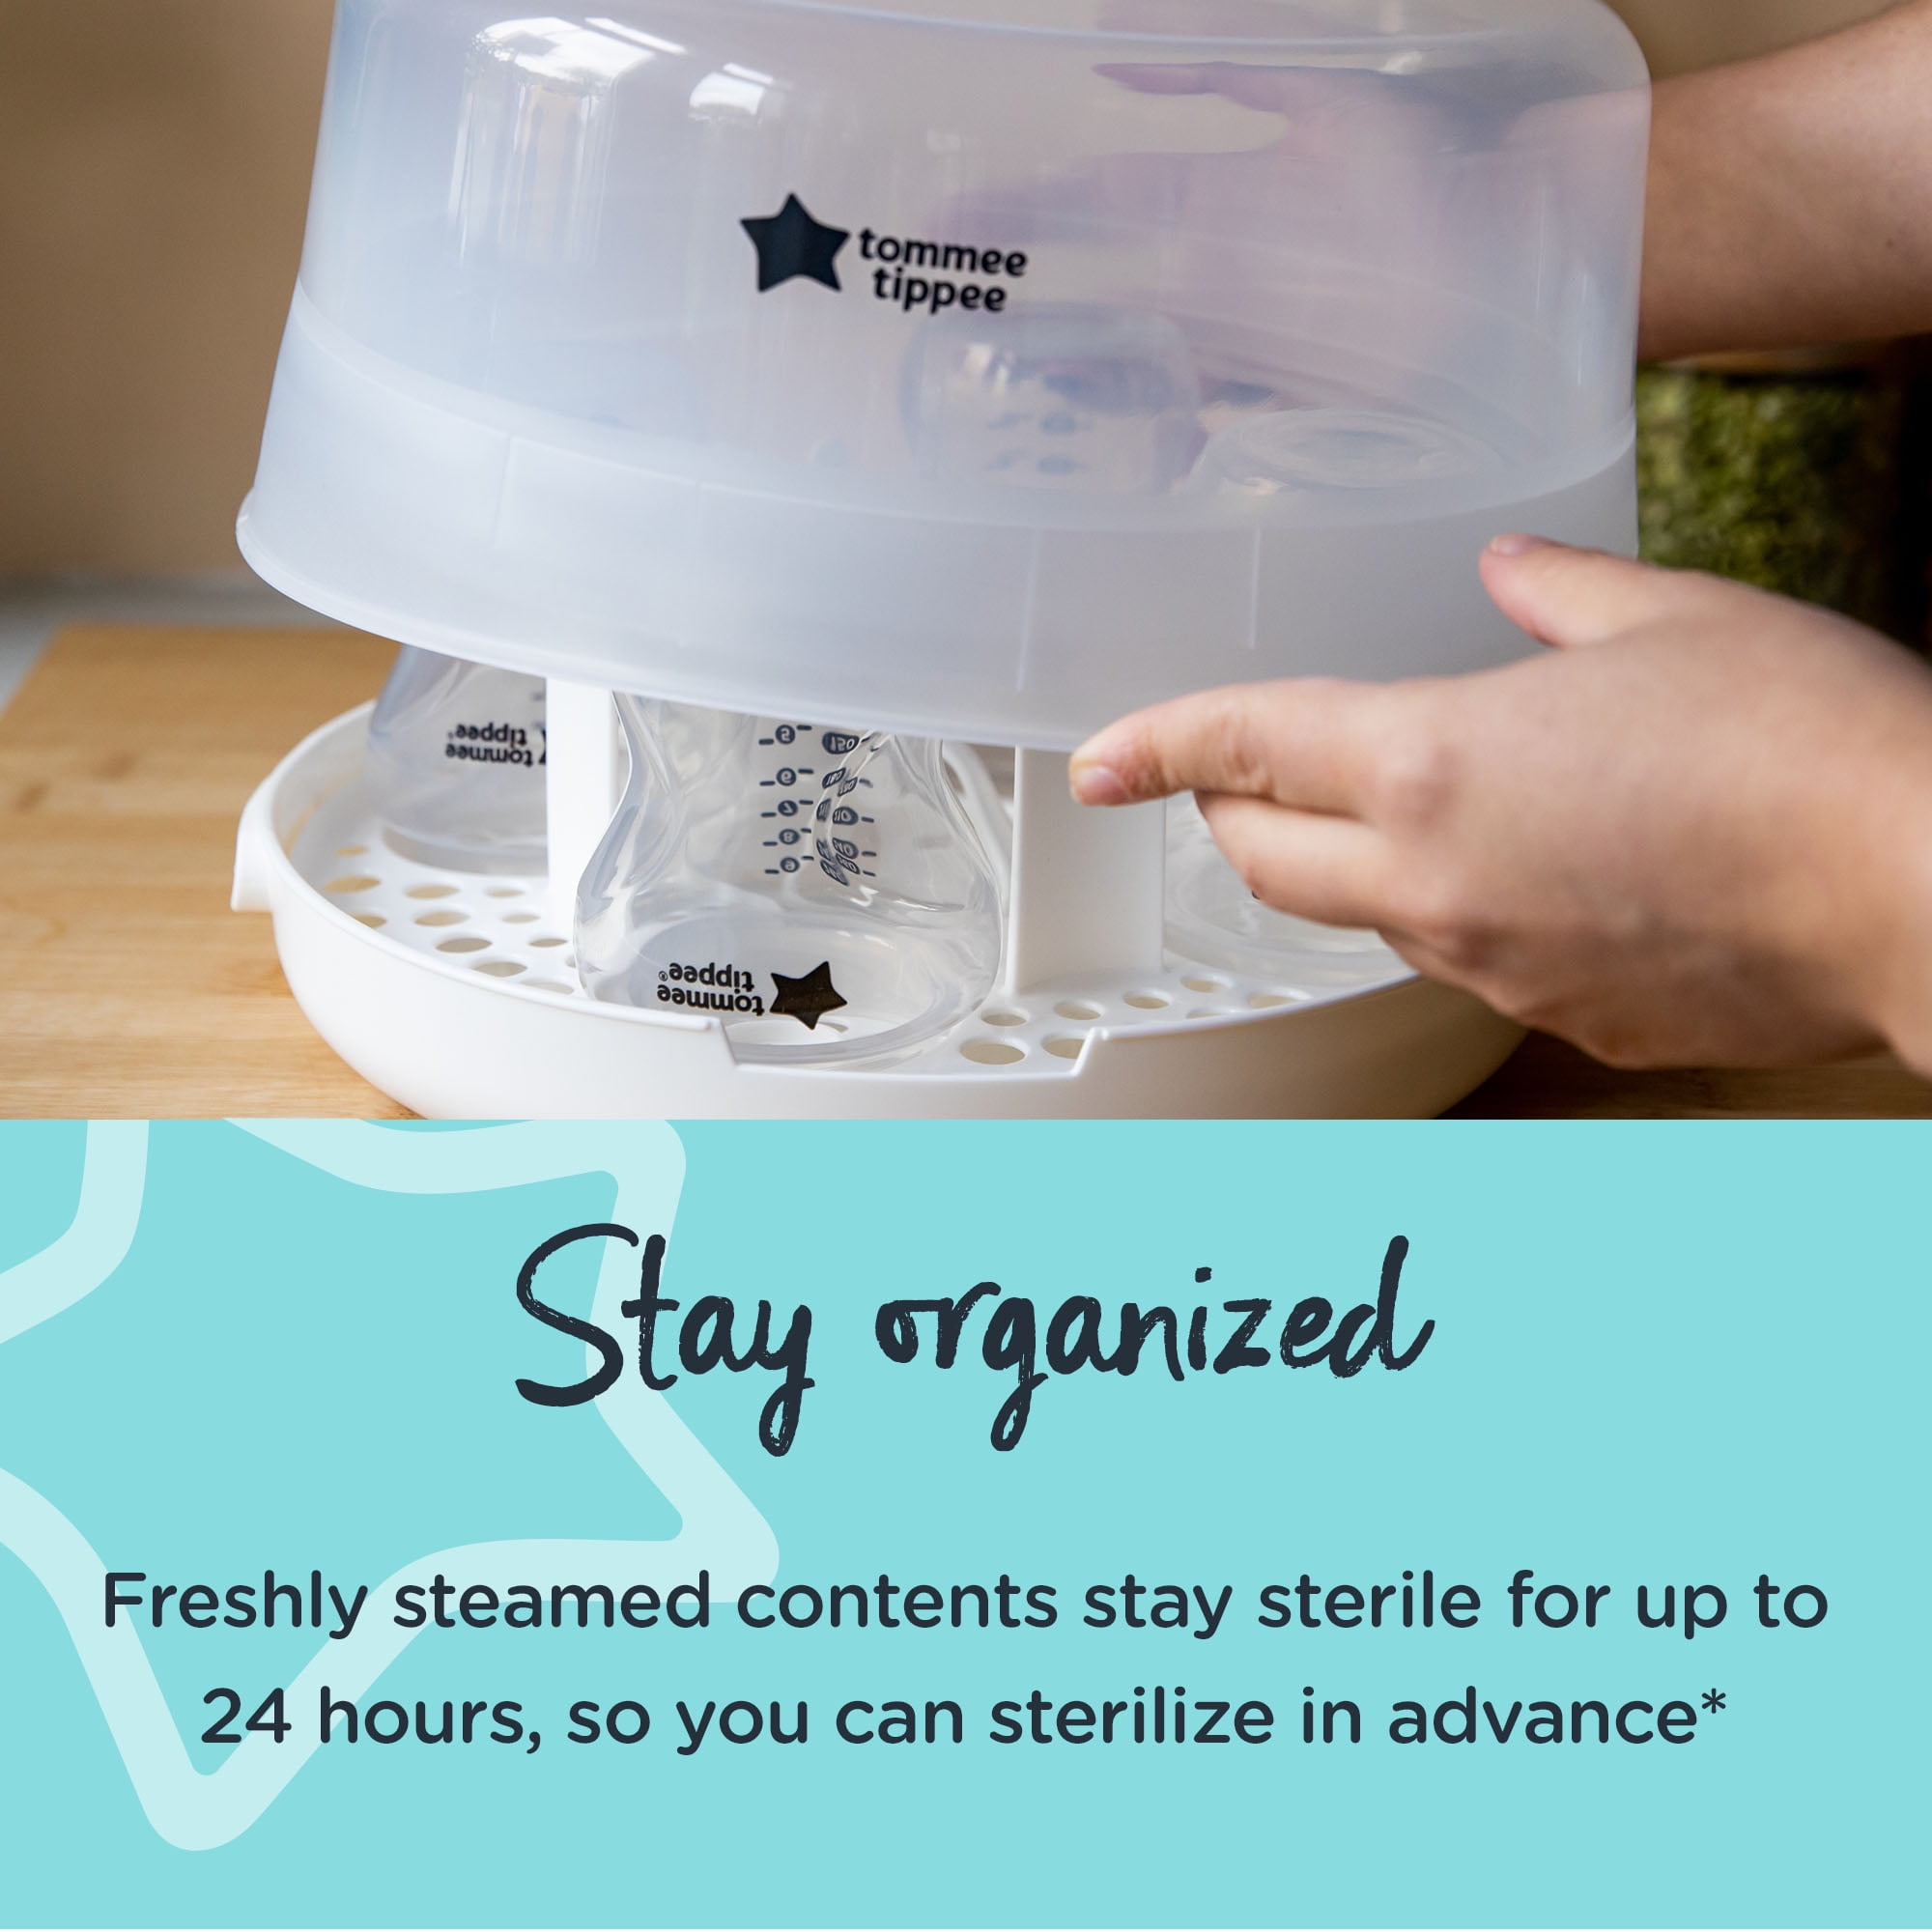 Microwave Steam Sterilizer - For Germ-Free Baby Bottles